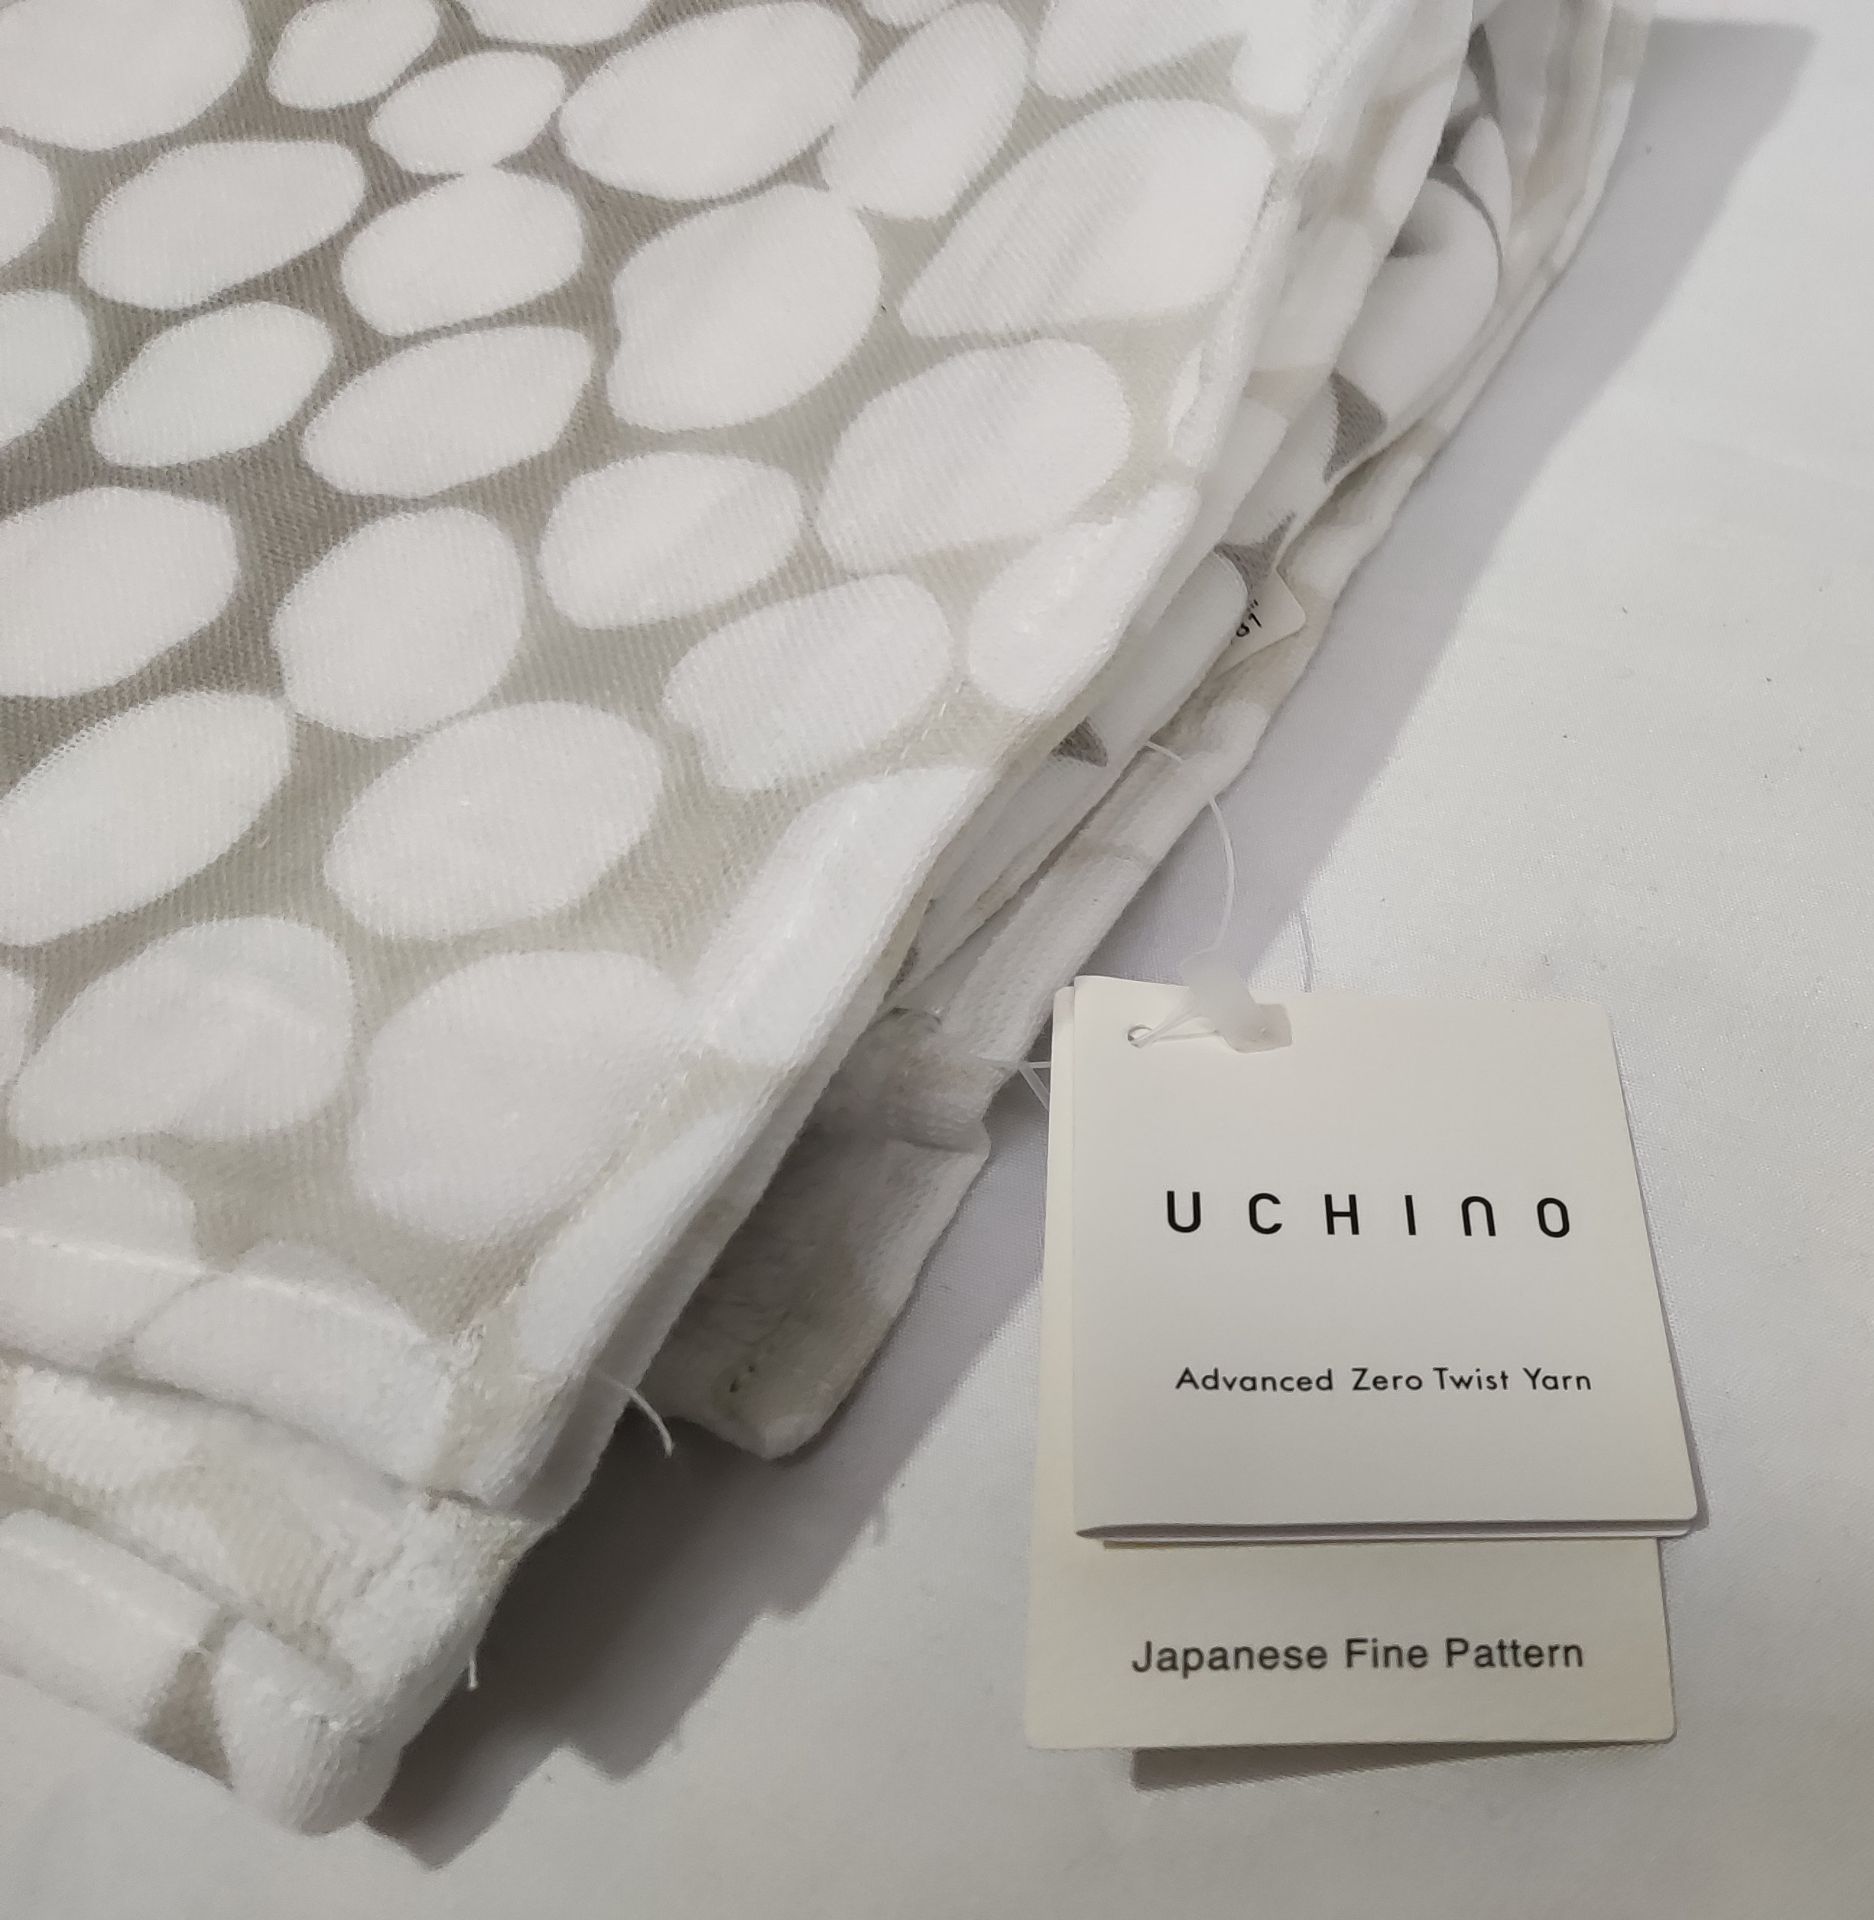 1 x UCHINO Japanese Fine Pattern Hand Towel 50X100cm - Grey - Original RRP £69.96 - Ref: 7395403/ - Image 3 of 10